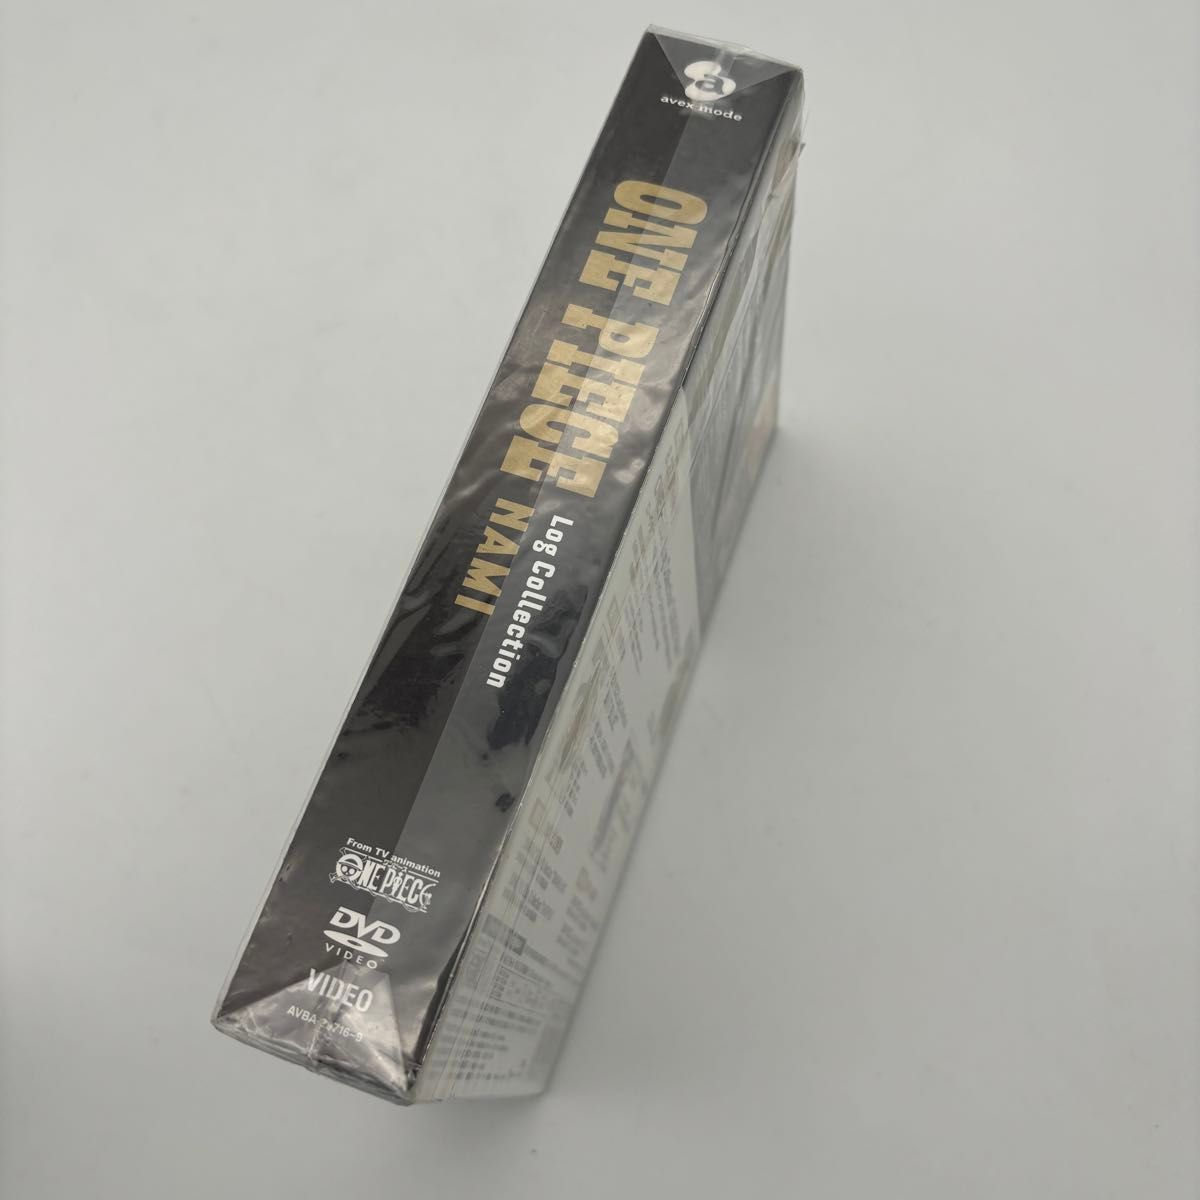 ONE PIECE LOG COLLECTION "NAMI" [DVD] ワンピース ログコレクション DVD